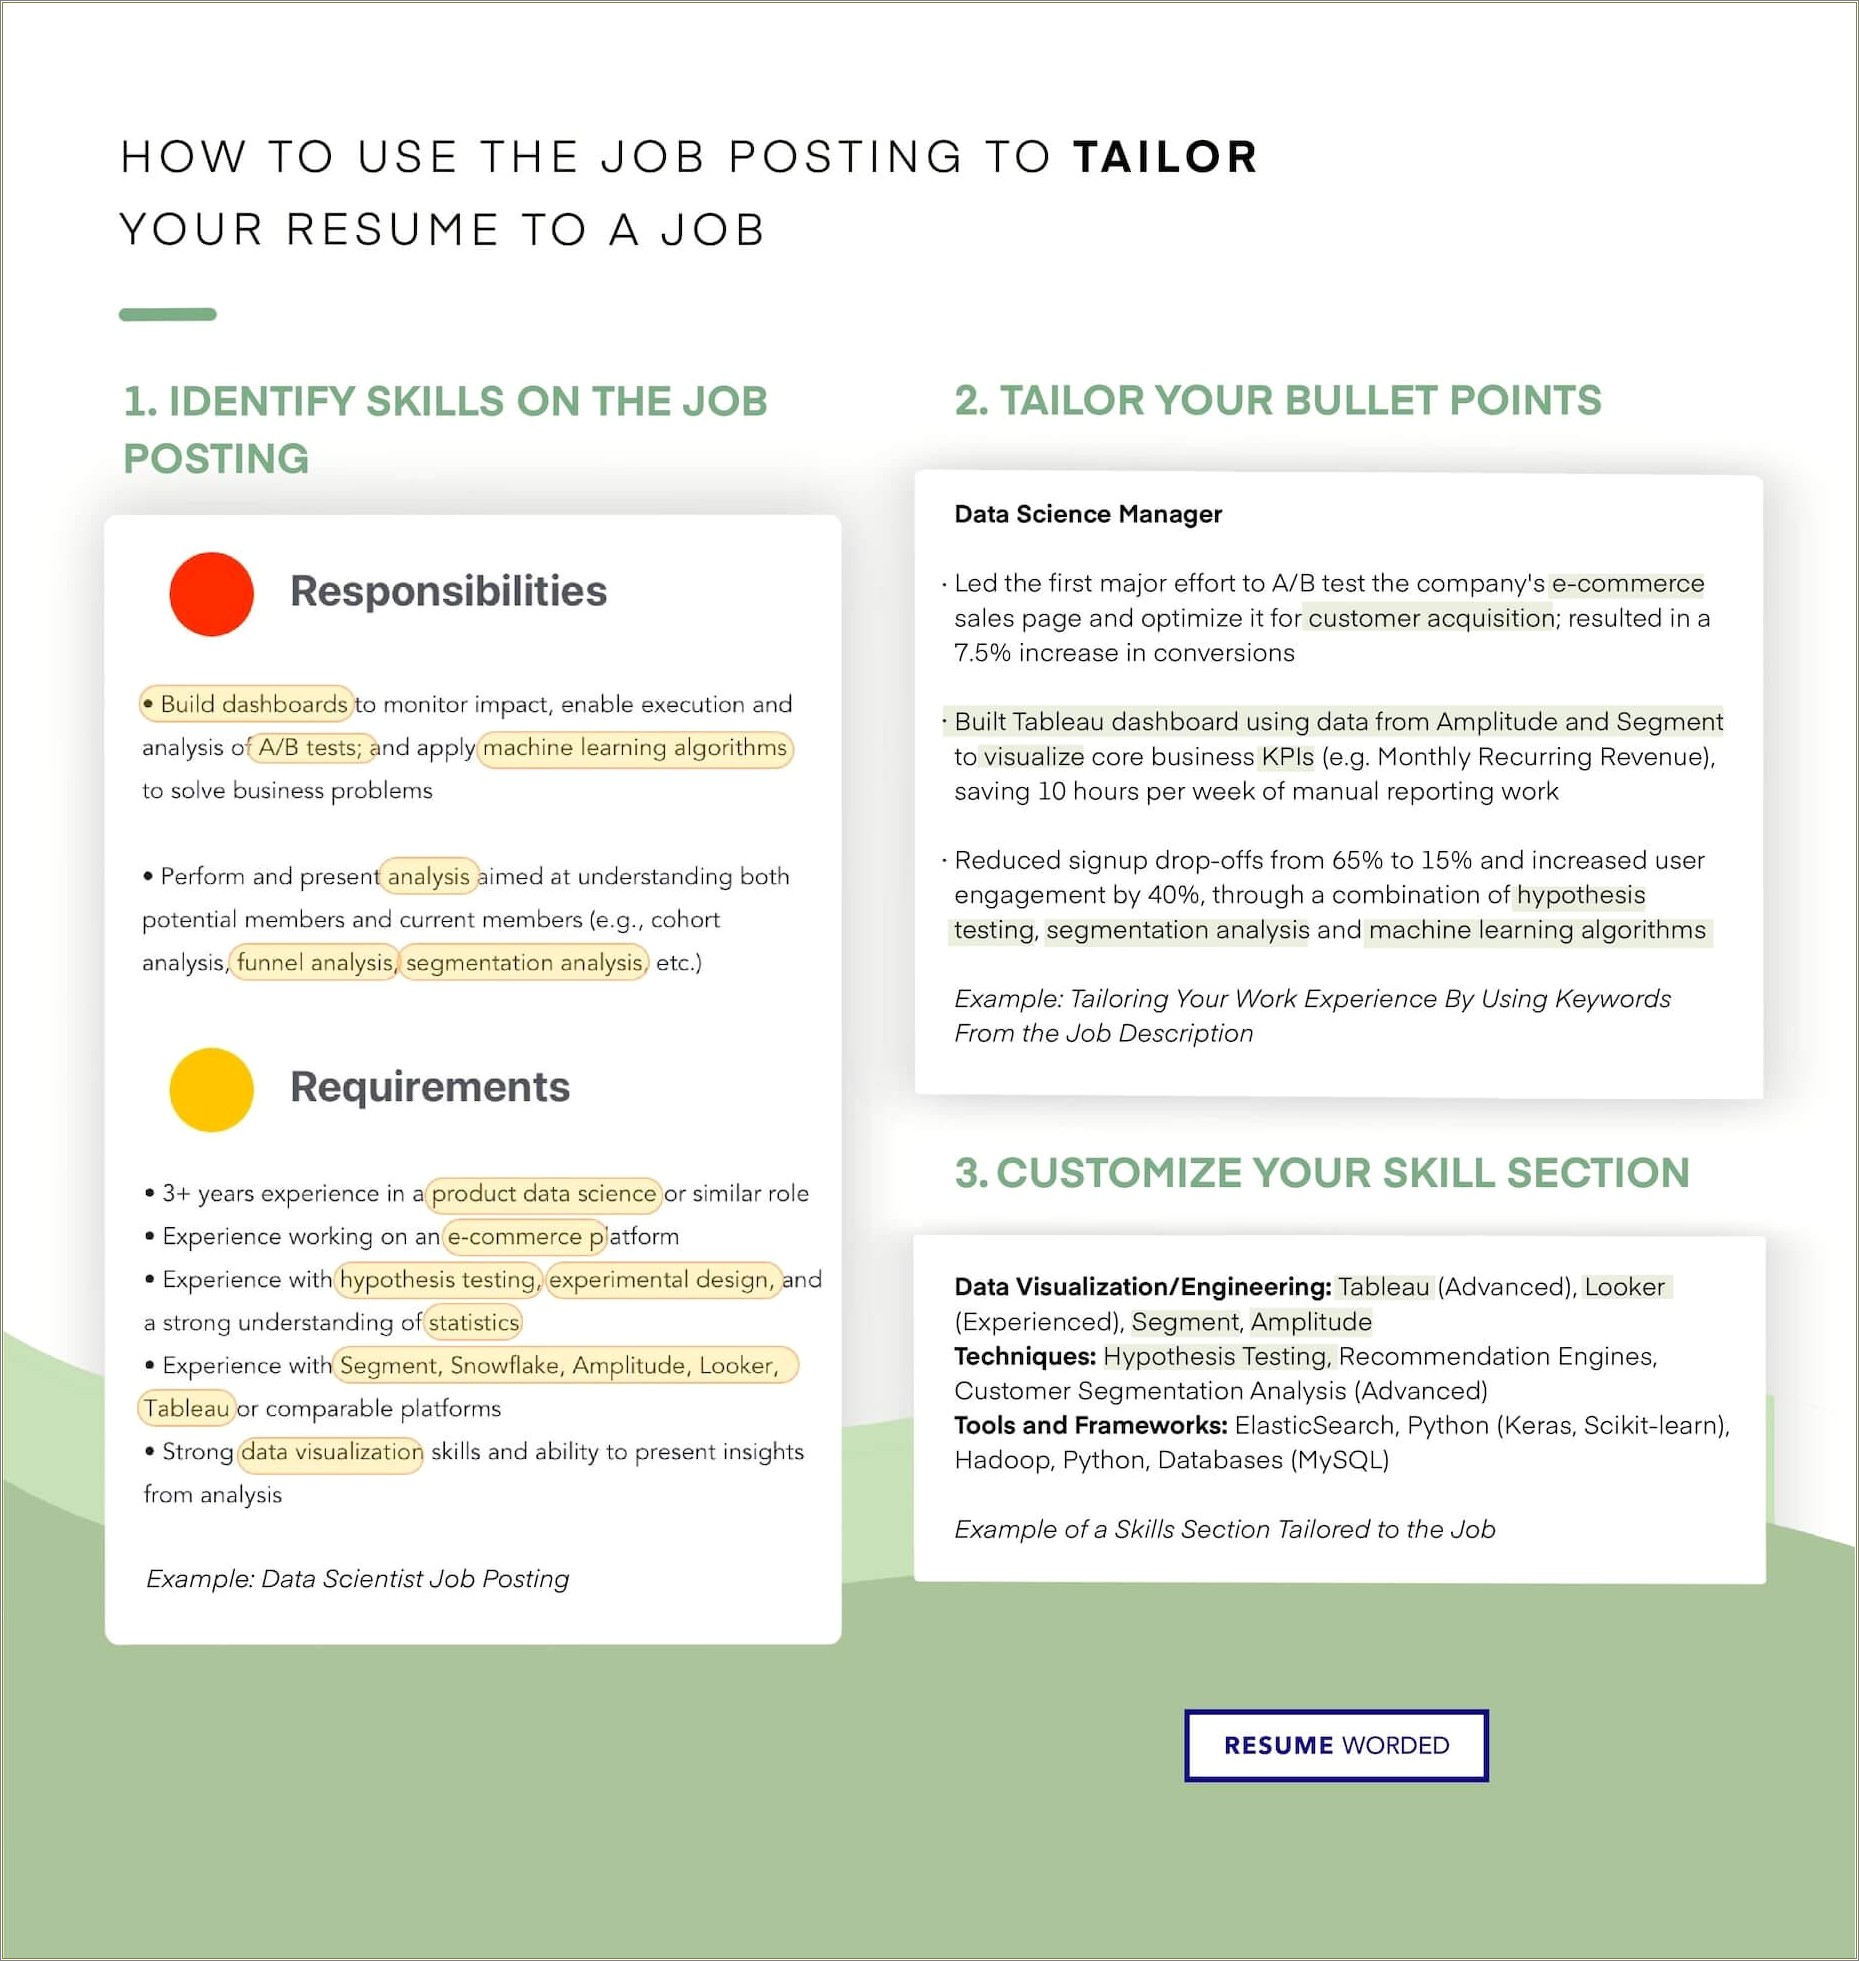 Purchase Manager Job Description For Resume